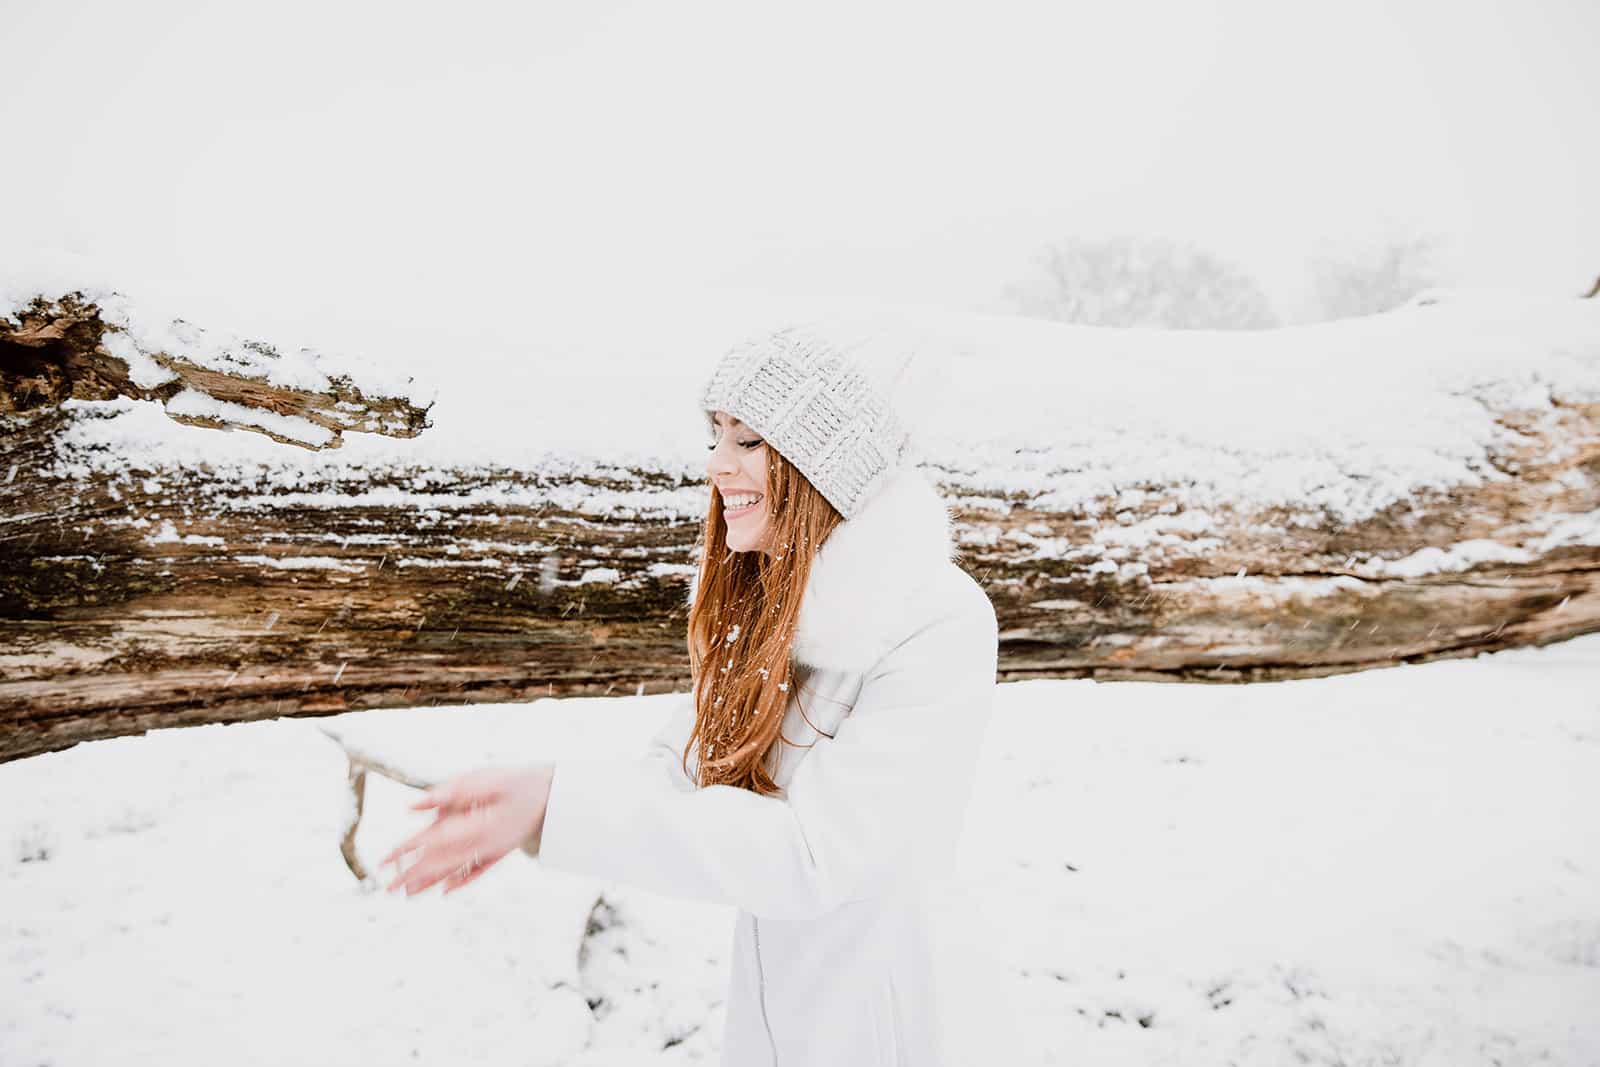 Tania-Flores-Photography-Girl-Portaits-Snow-15